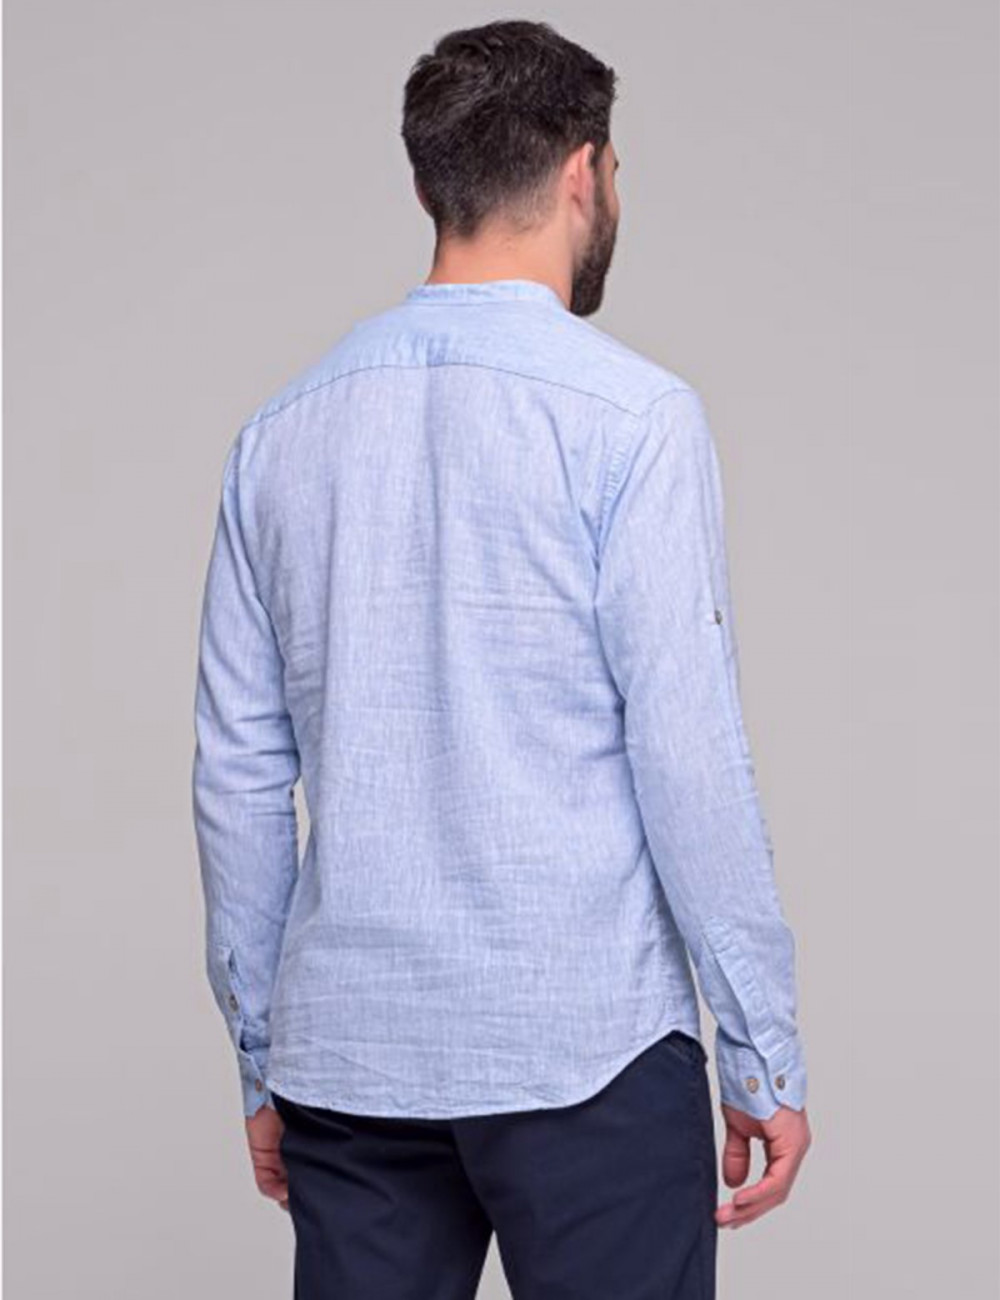 Ben Tailor ανδρική γαλάζια πουκαμίσα λινό Komo 0575G